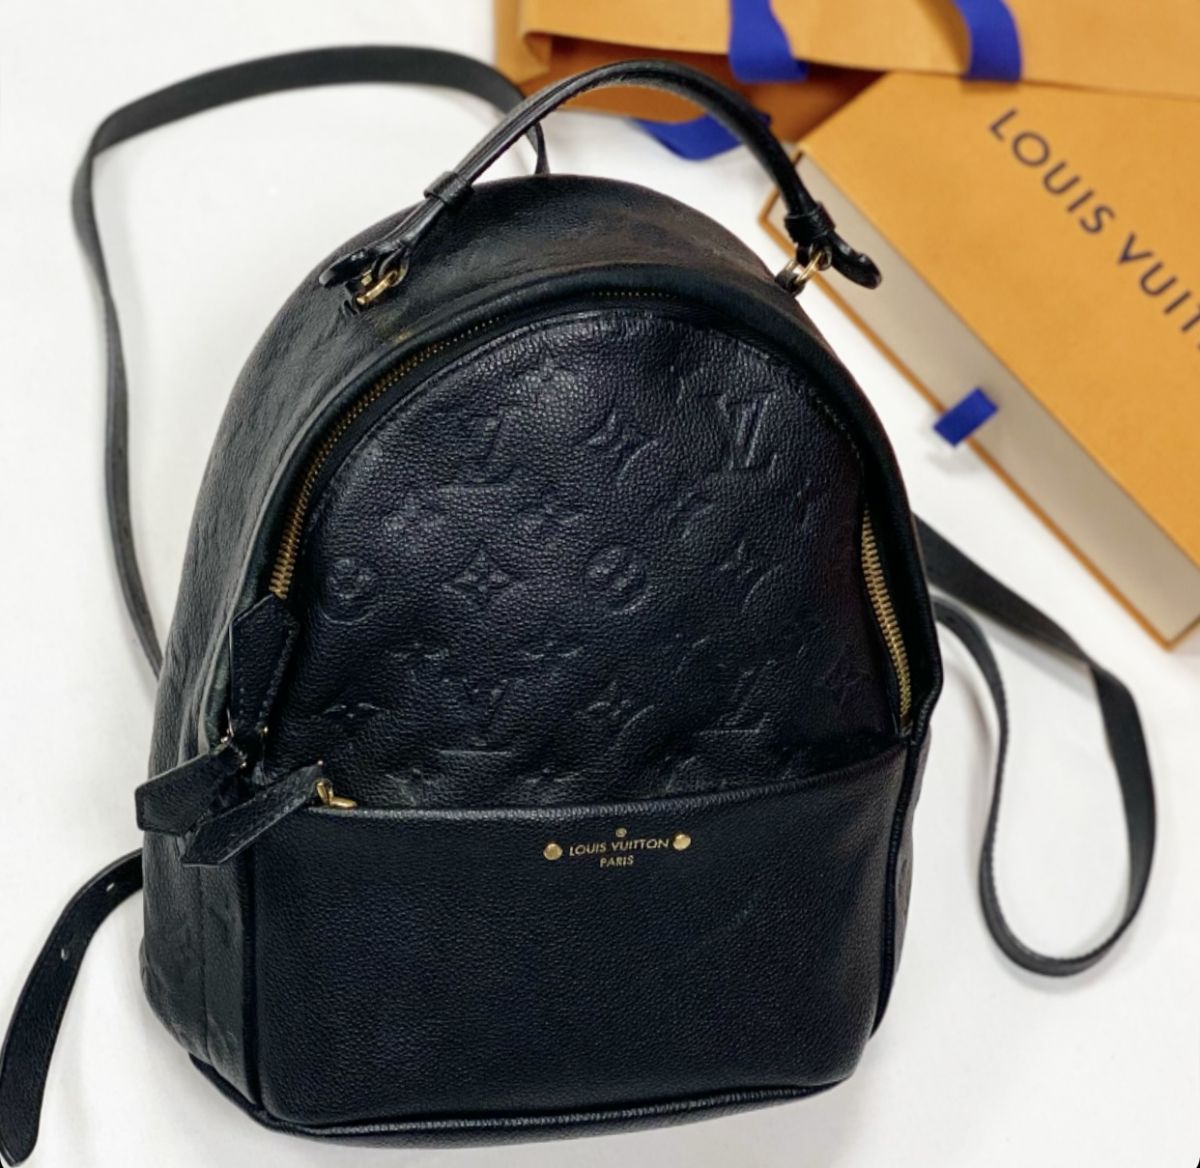 Рюкзак Louis Vuitton размер 20/25 цена 53 847 руб 